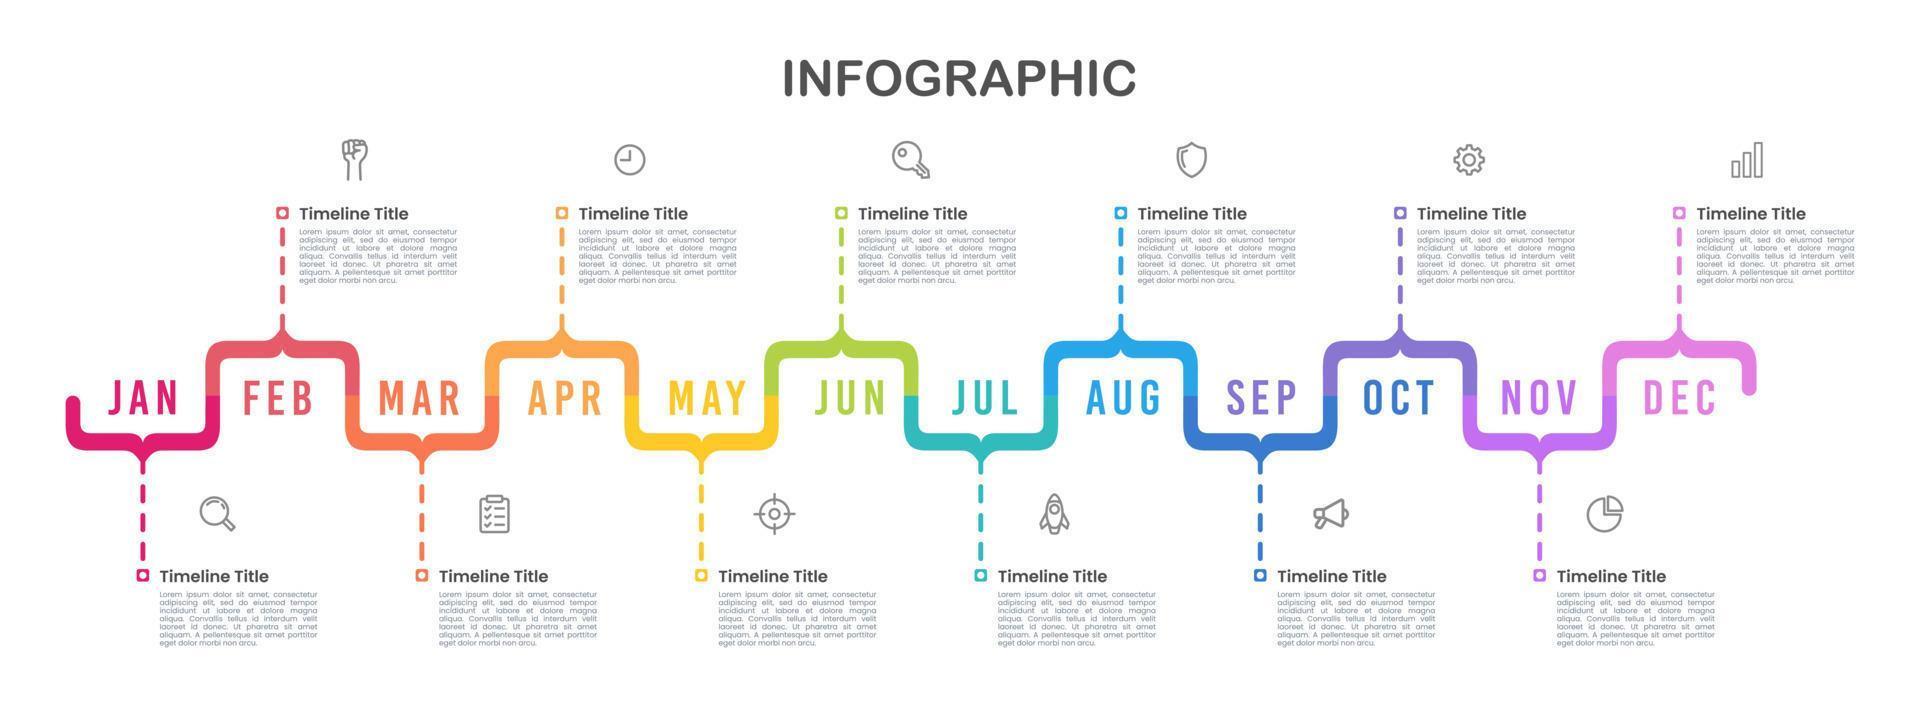 Business infographic bracket template. 12-month timeline. Vector illustration.